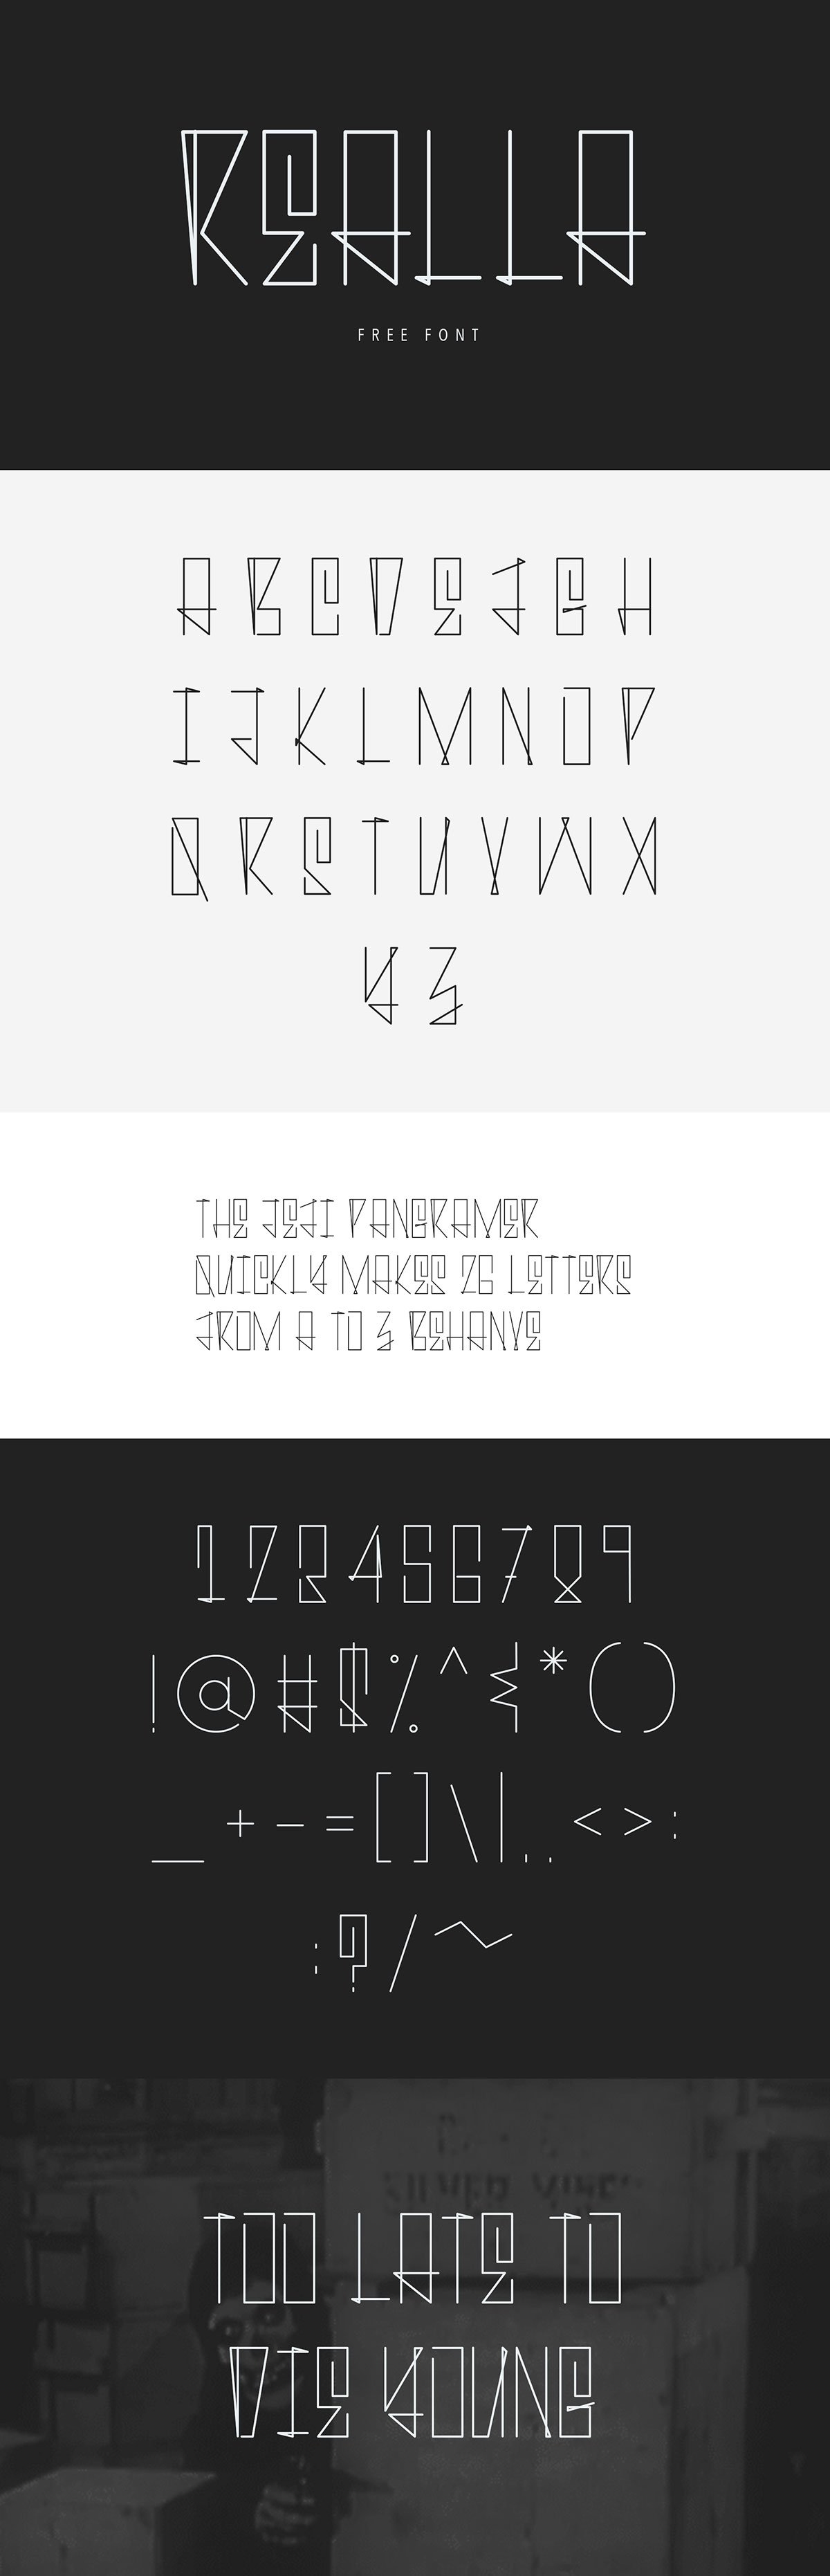 Free Realla Geometric Font